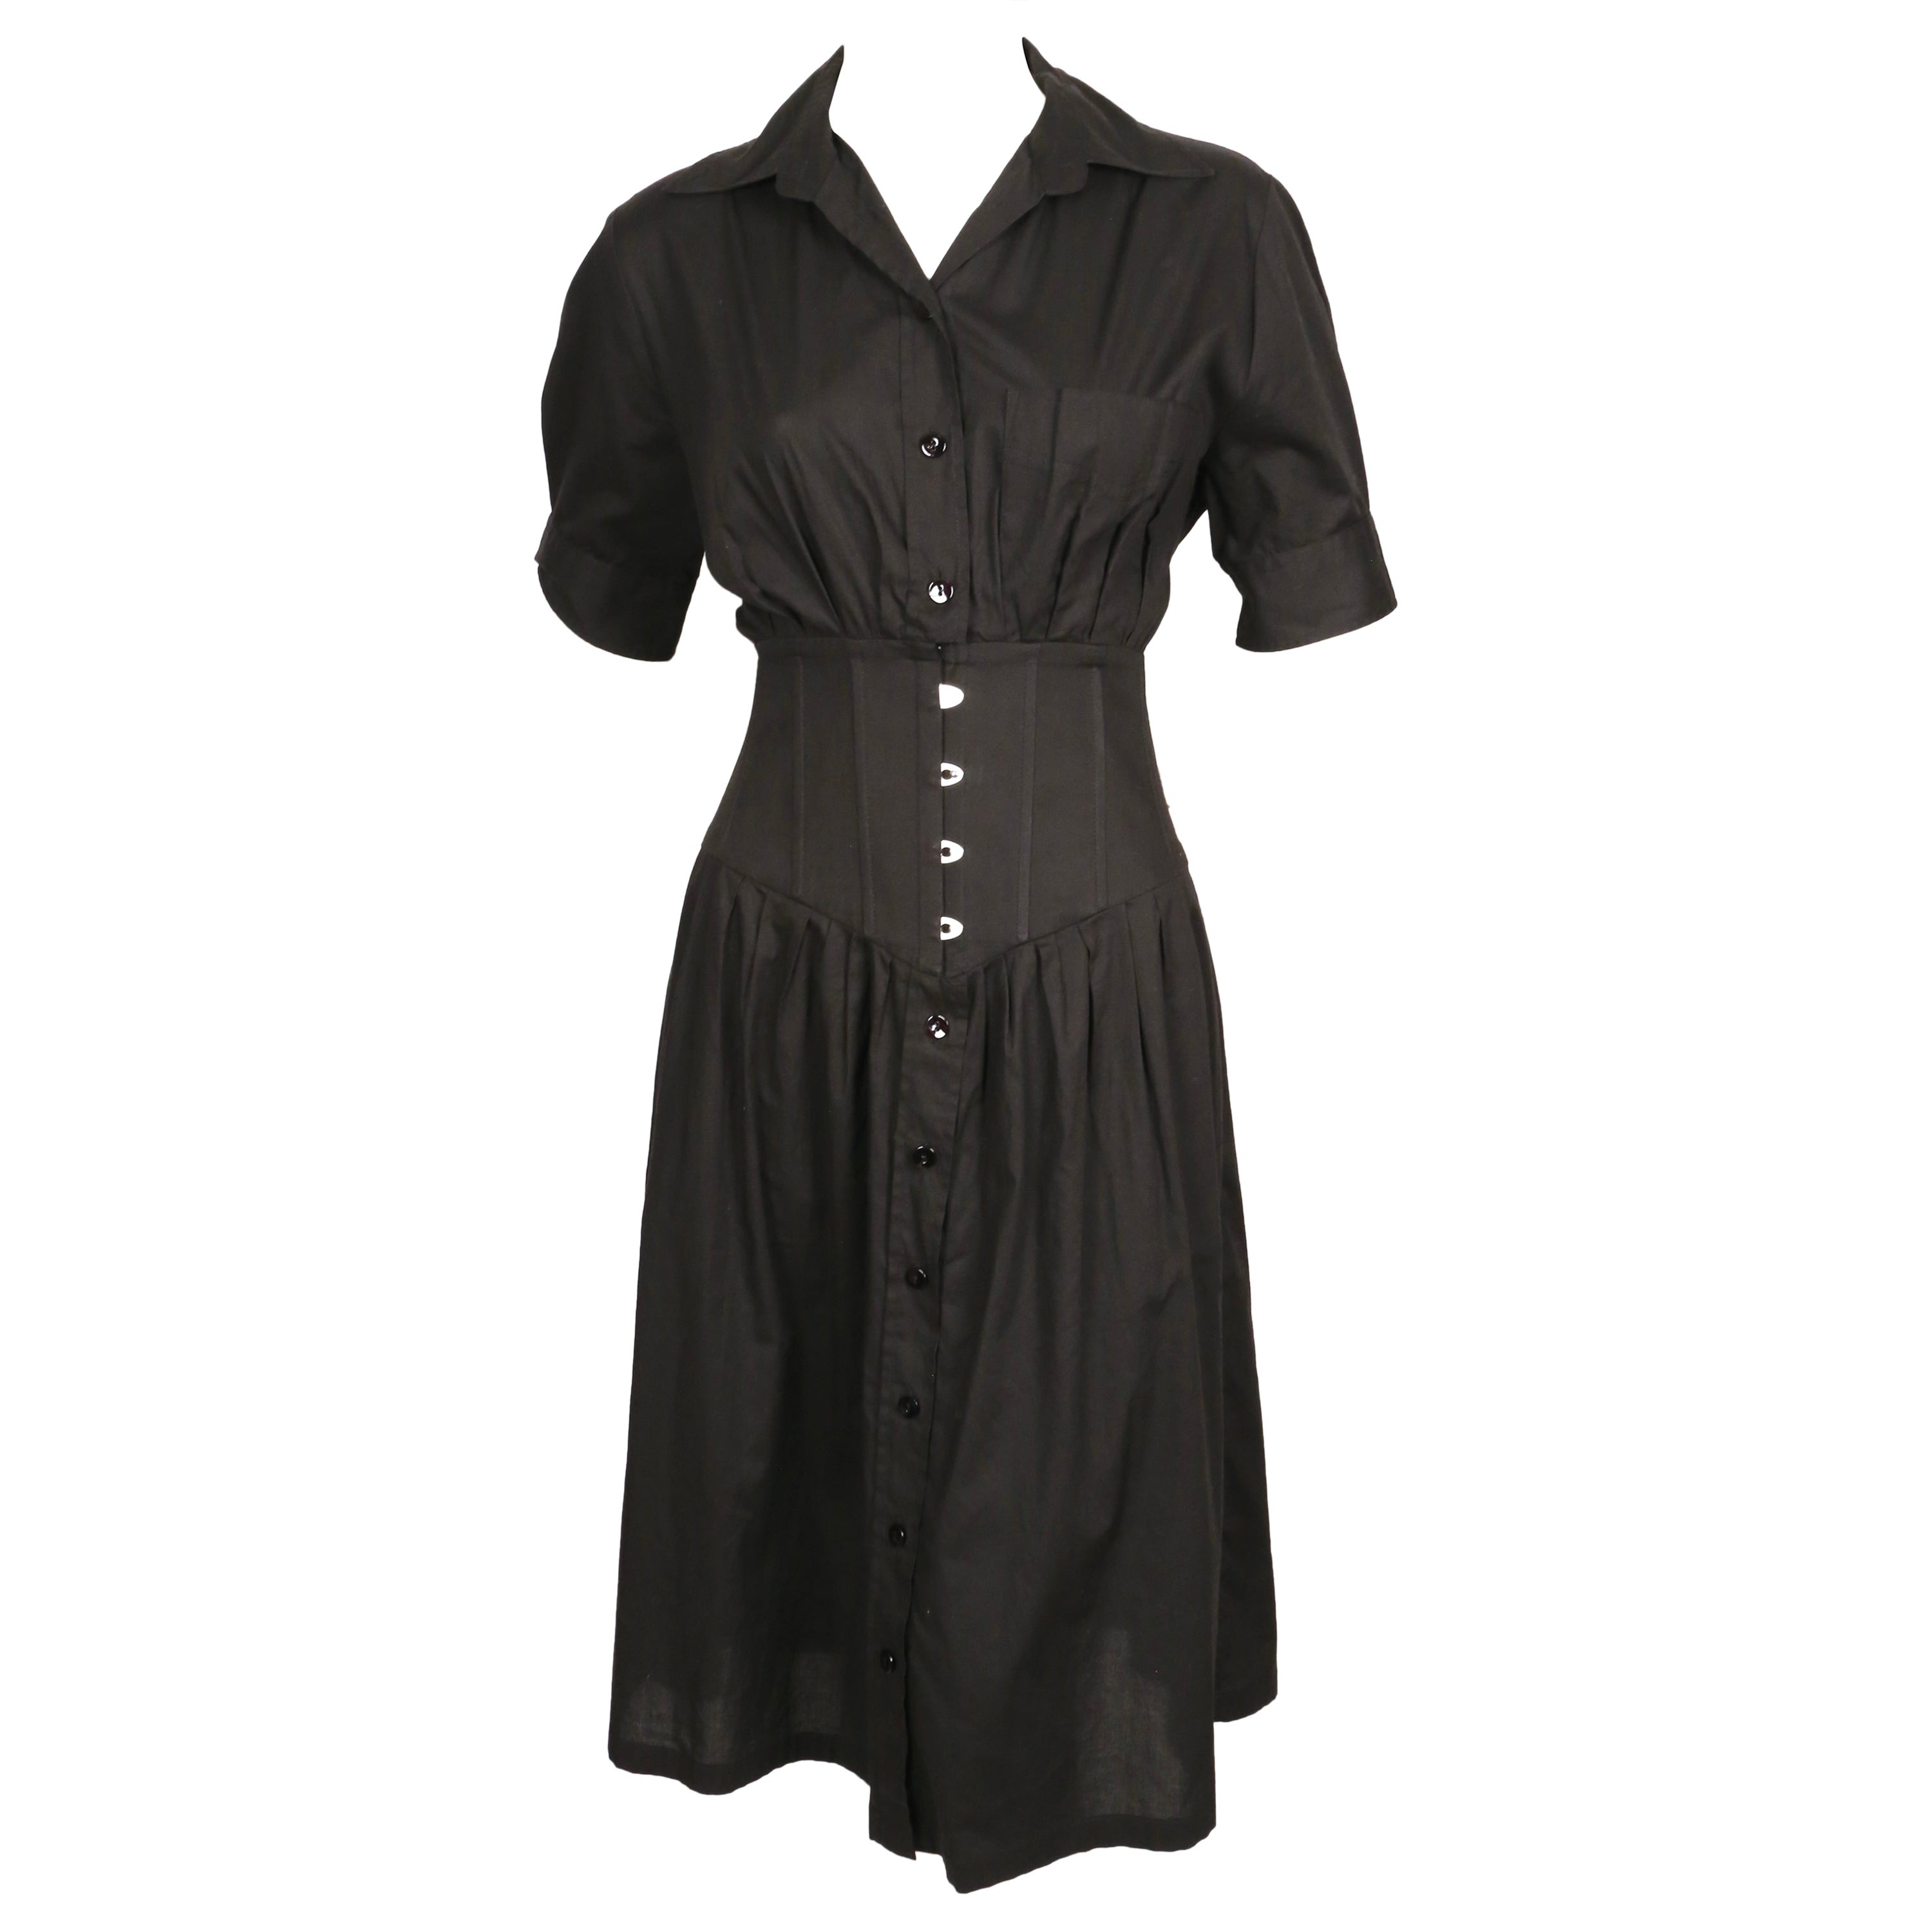 1990's JEAN PAUL GAULTIER black dress with corset waist For Sale